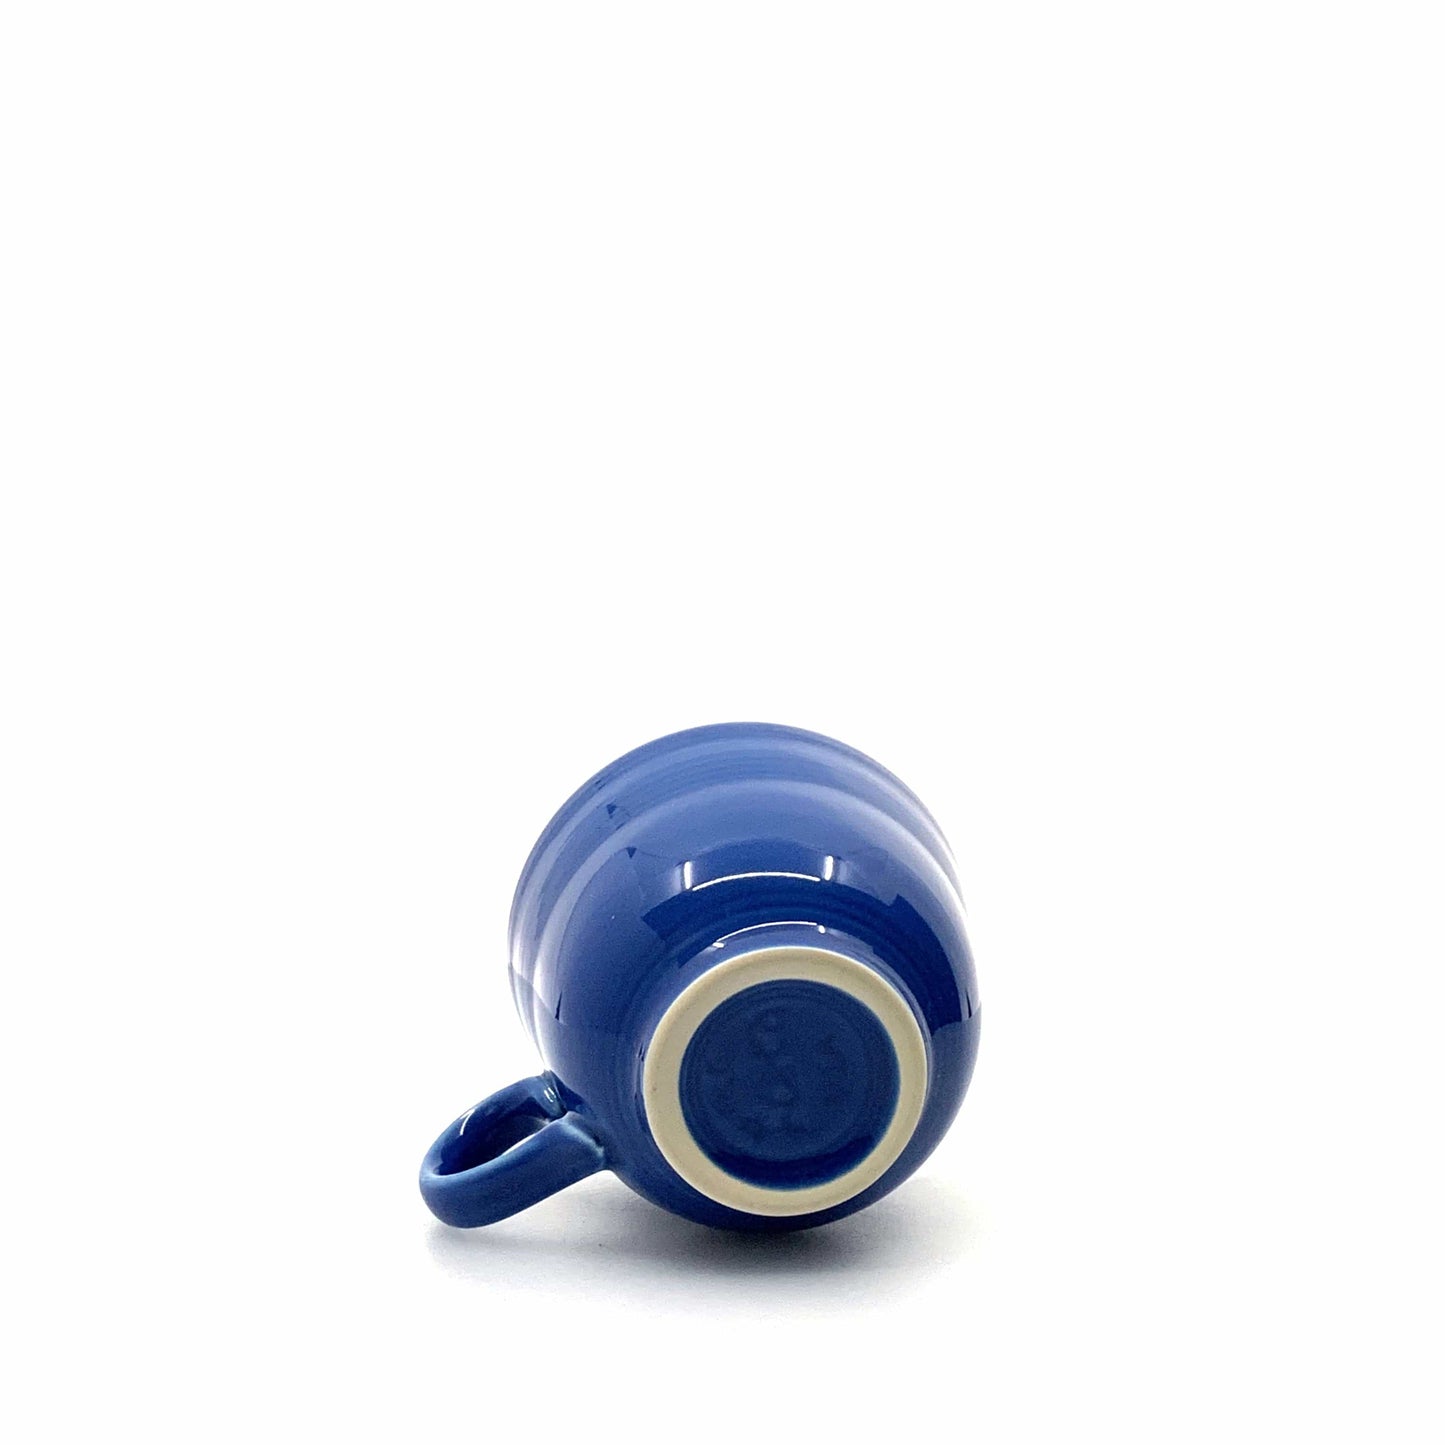 Fiesta Cobalt Blue Replacement Tea Coffee Cup and Saucer Set Homer Laughlin Co USA.